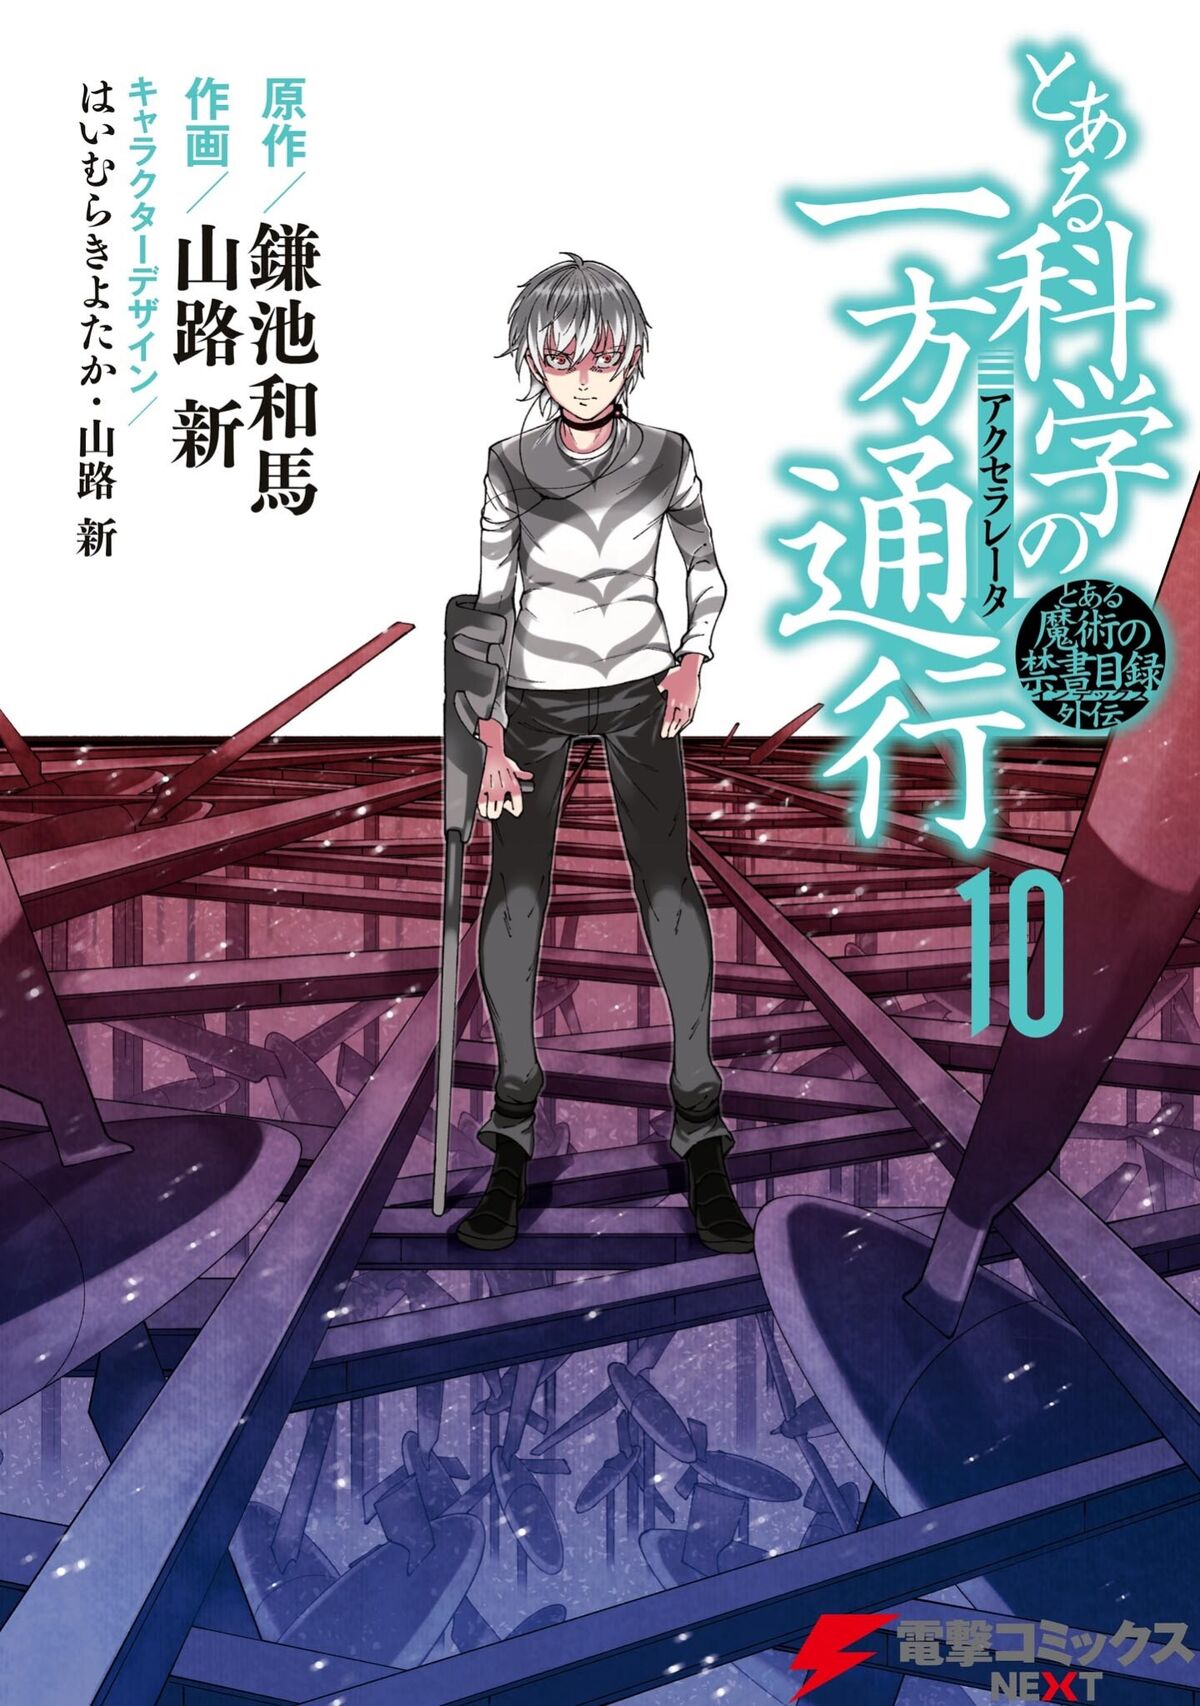 Toaru Kagaku no Accelerator Manga Volume 11